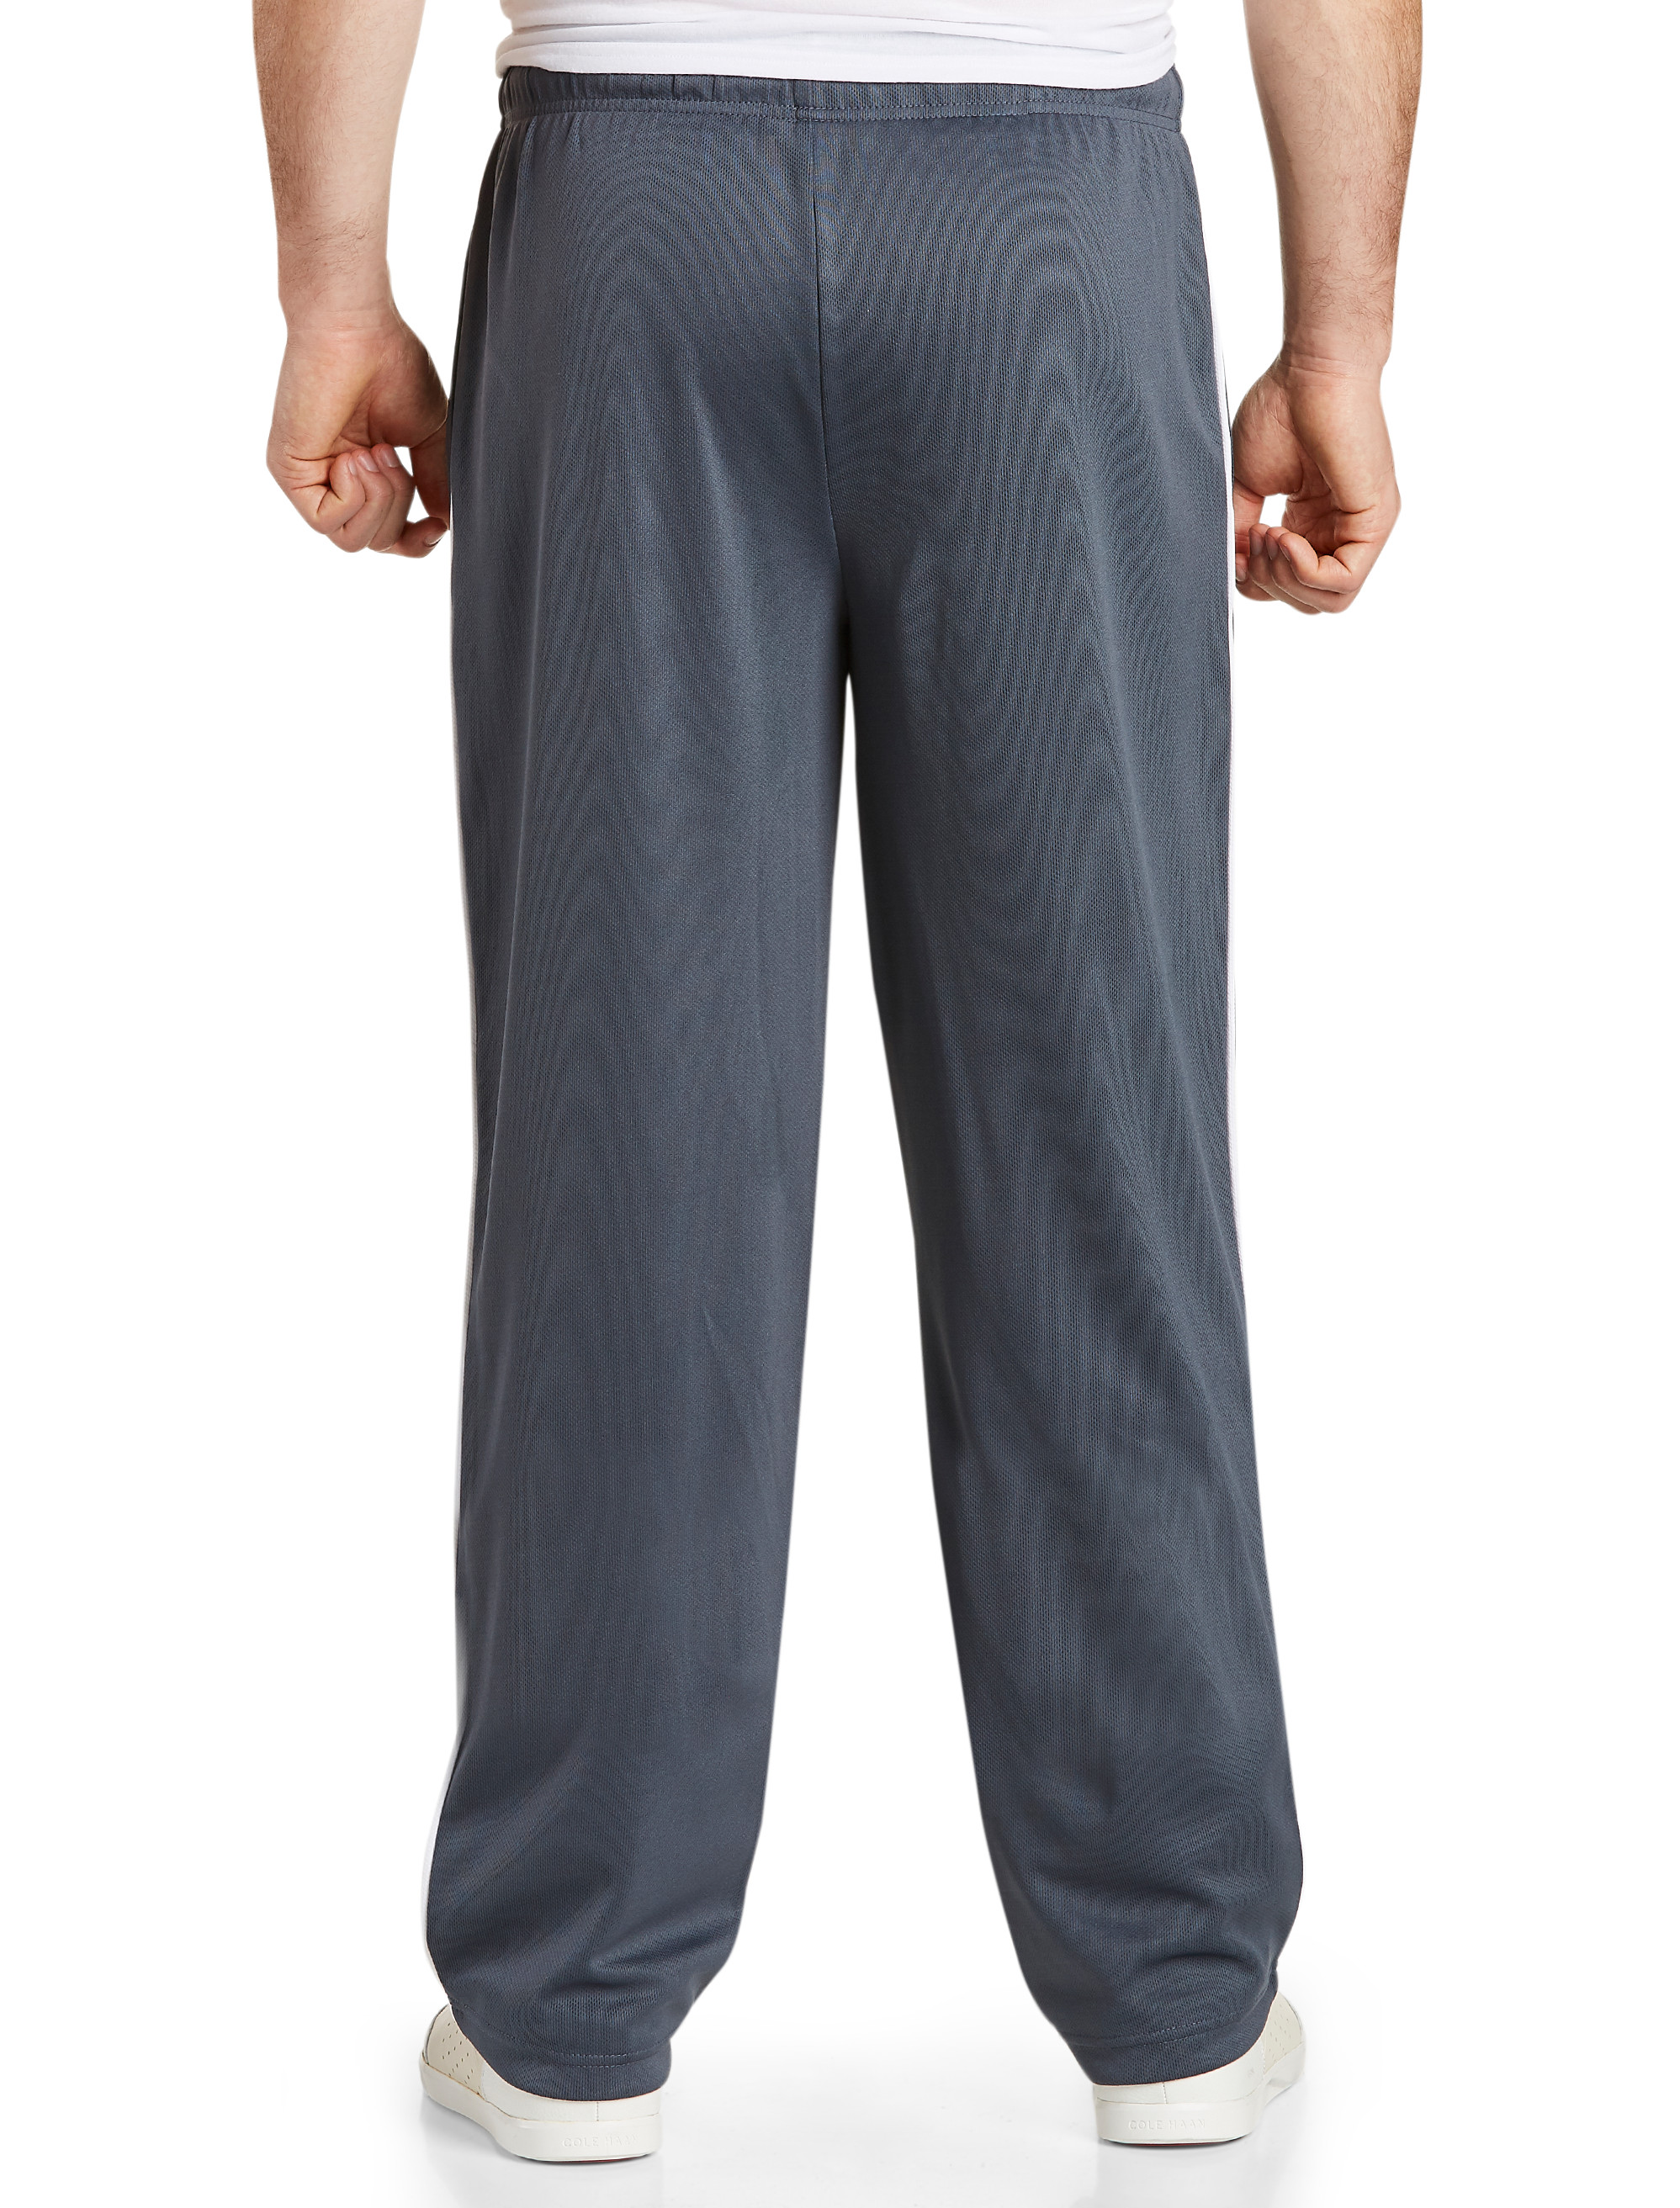 Hot Sale 130kg Pajamas For Men Cotton Home Sleep Bottoms 5XL Plus Size  Sleepwear Pants Autumn Winter Loose Trousers Male Clothes